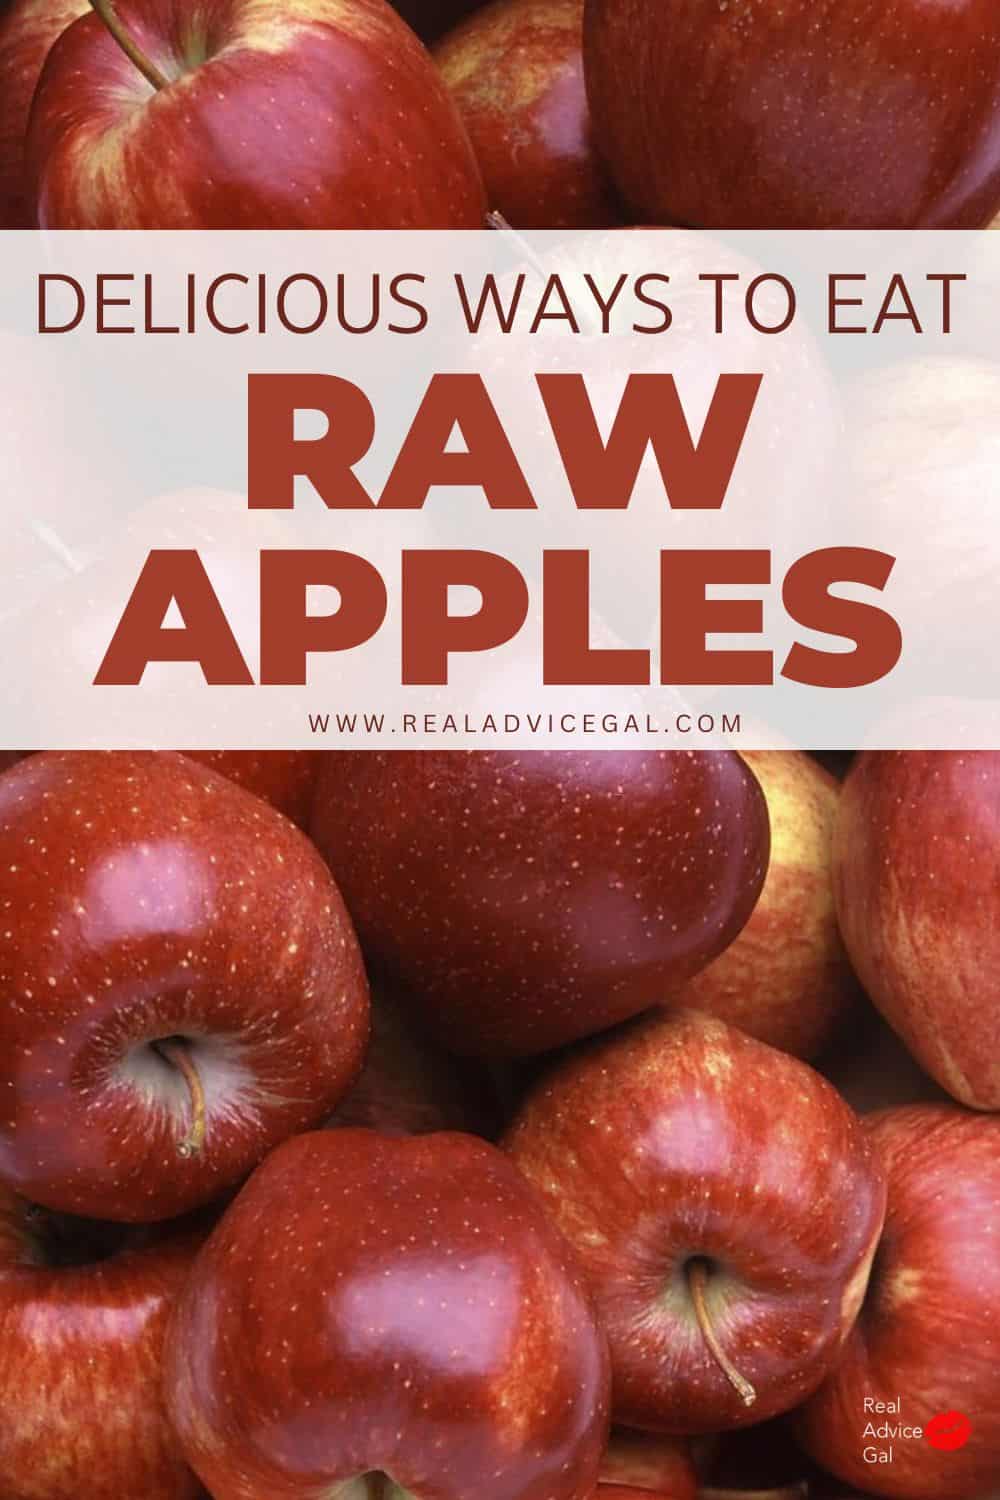 Ways to eat raw apples